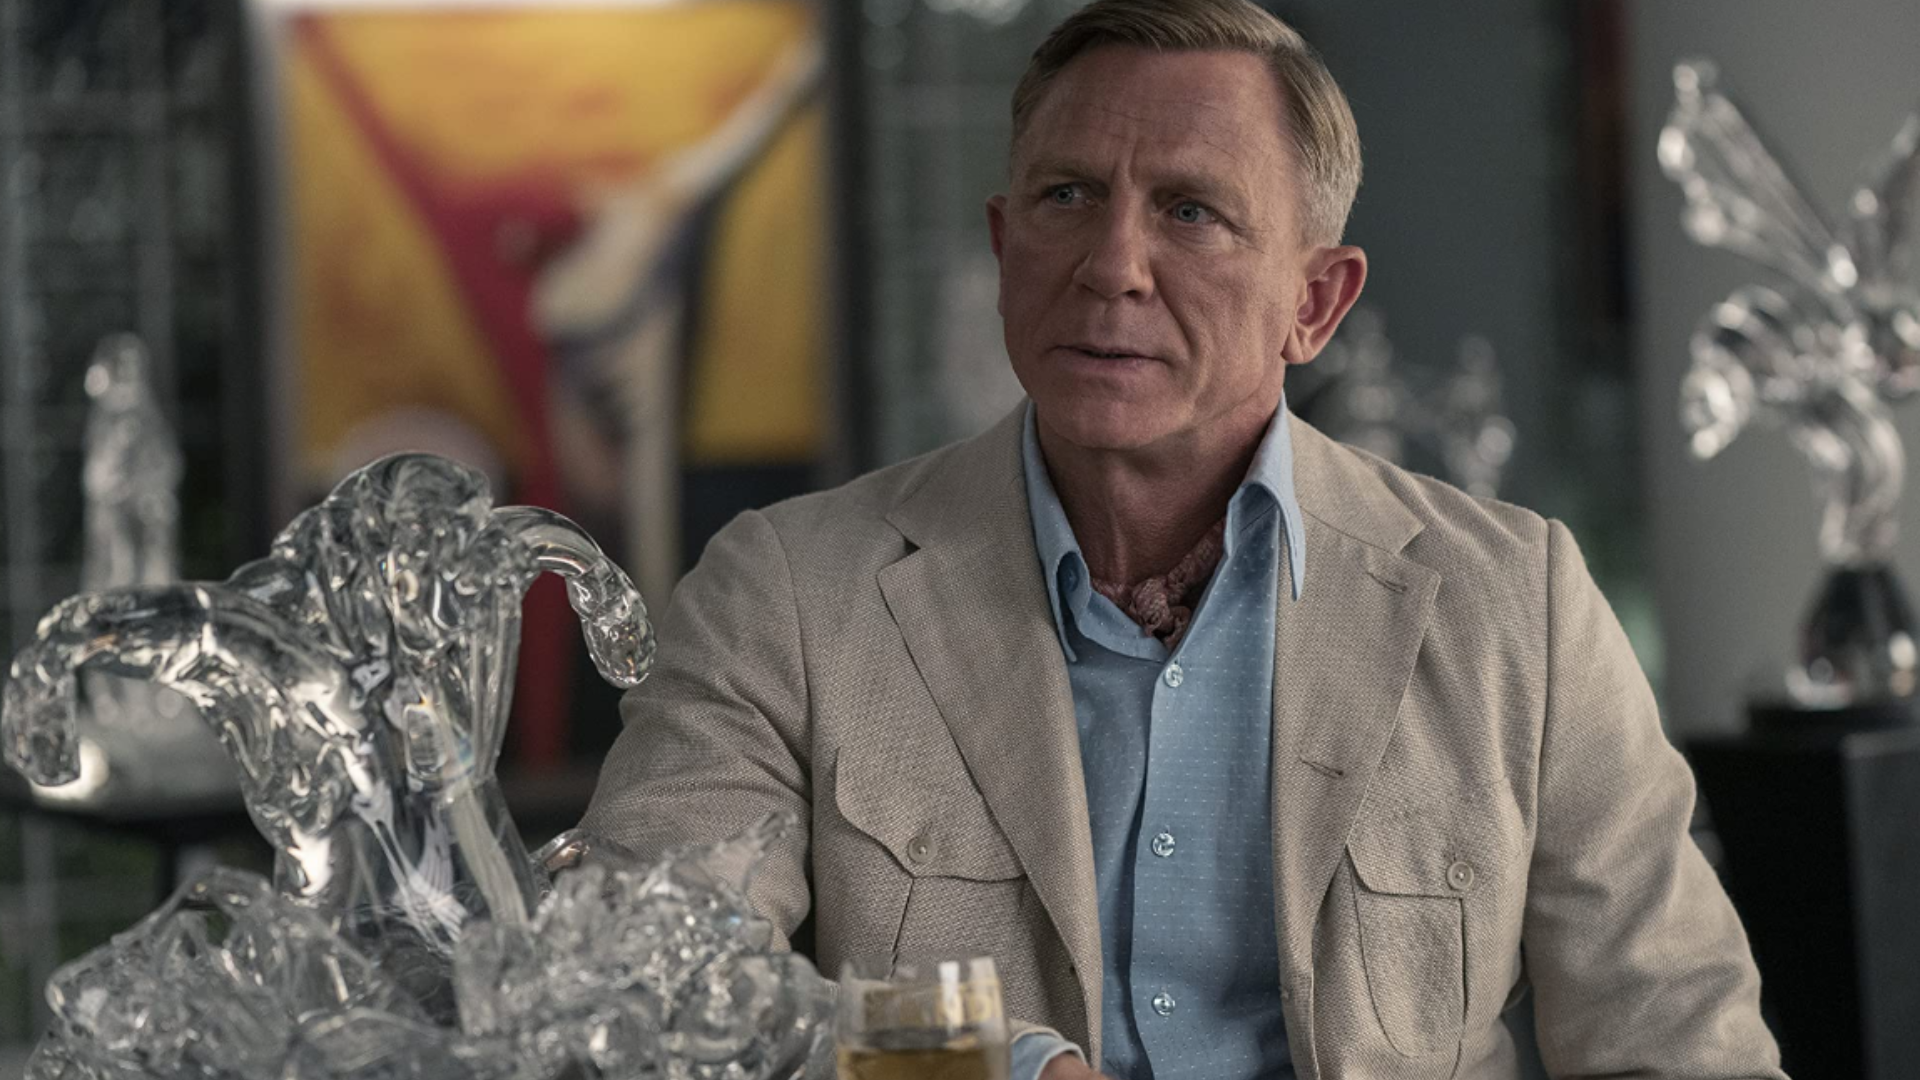 Daniel Craig - James Bond and Knives Out